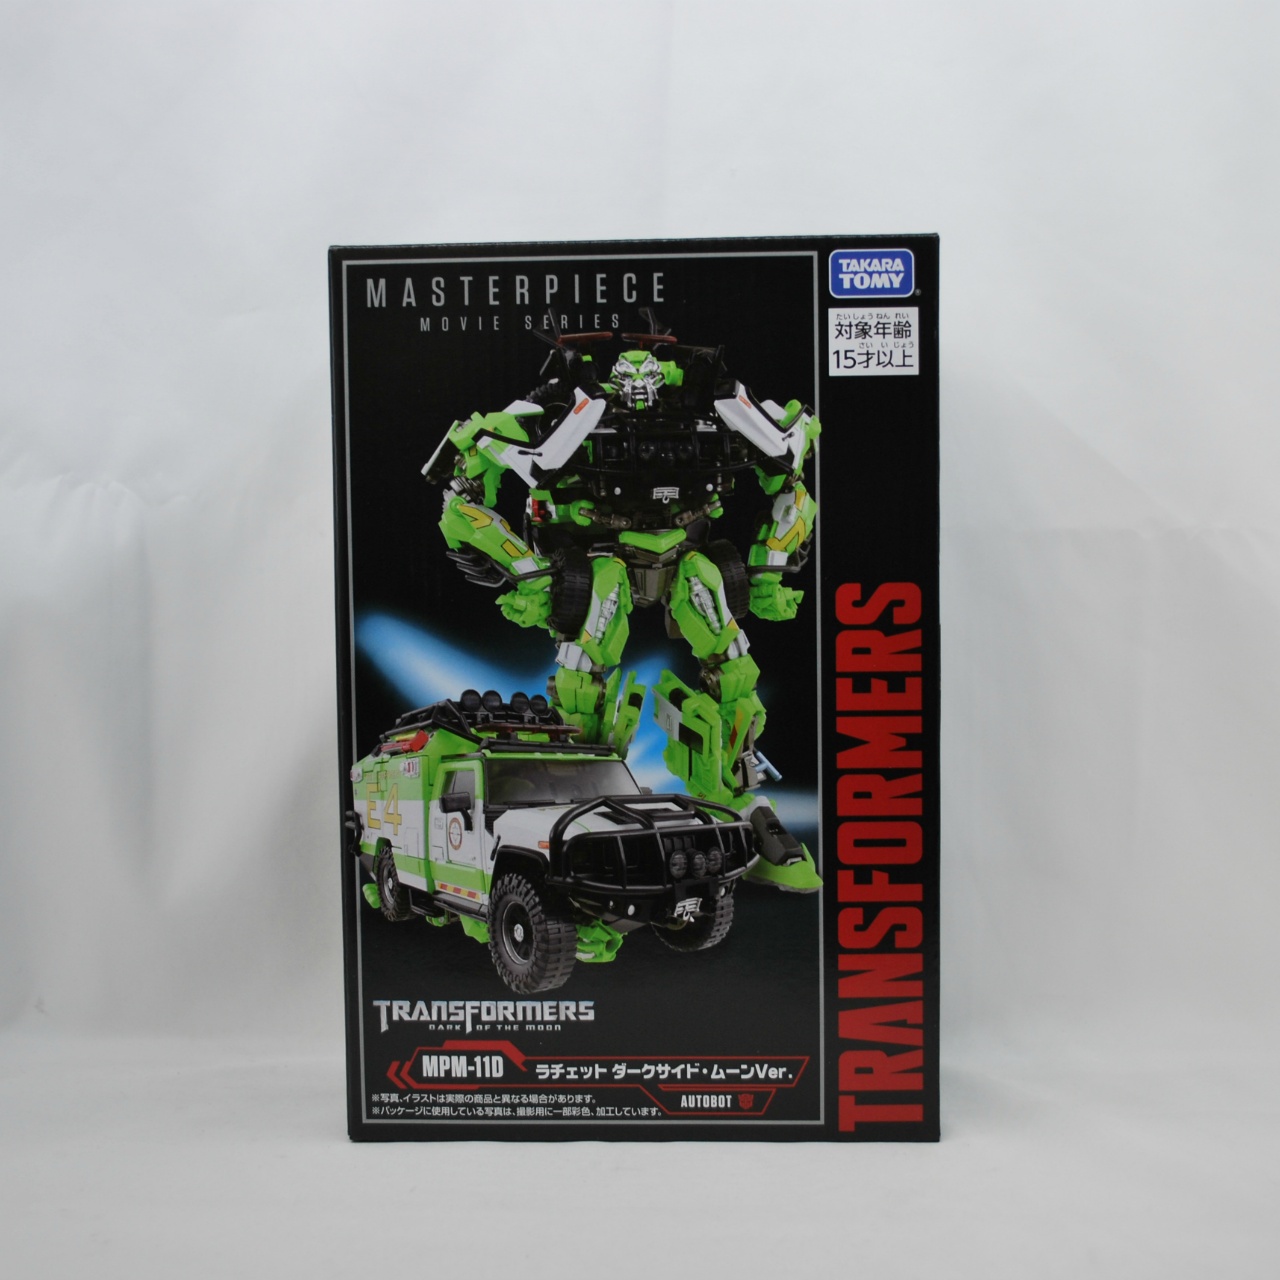 Transformers Masterpiece MPM11D